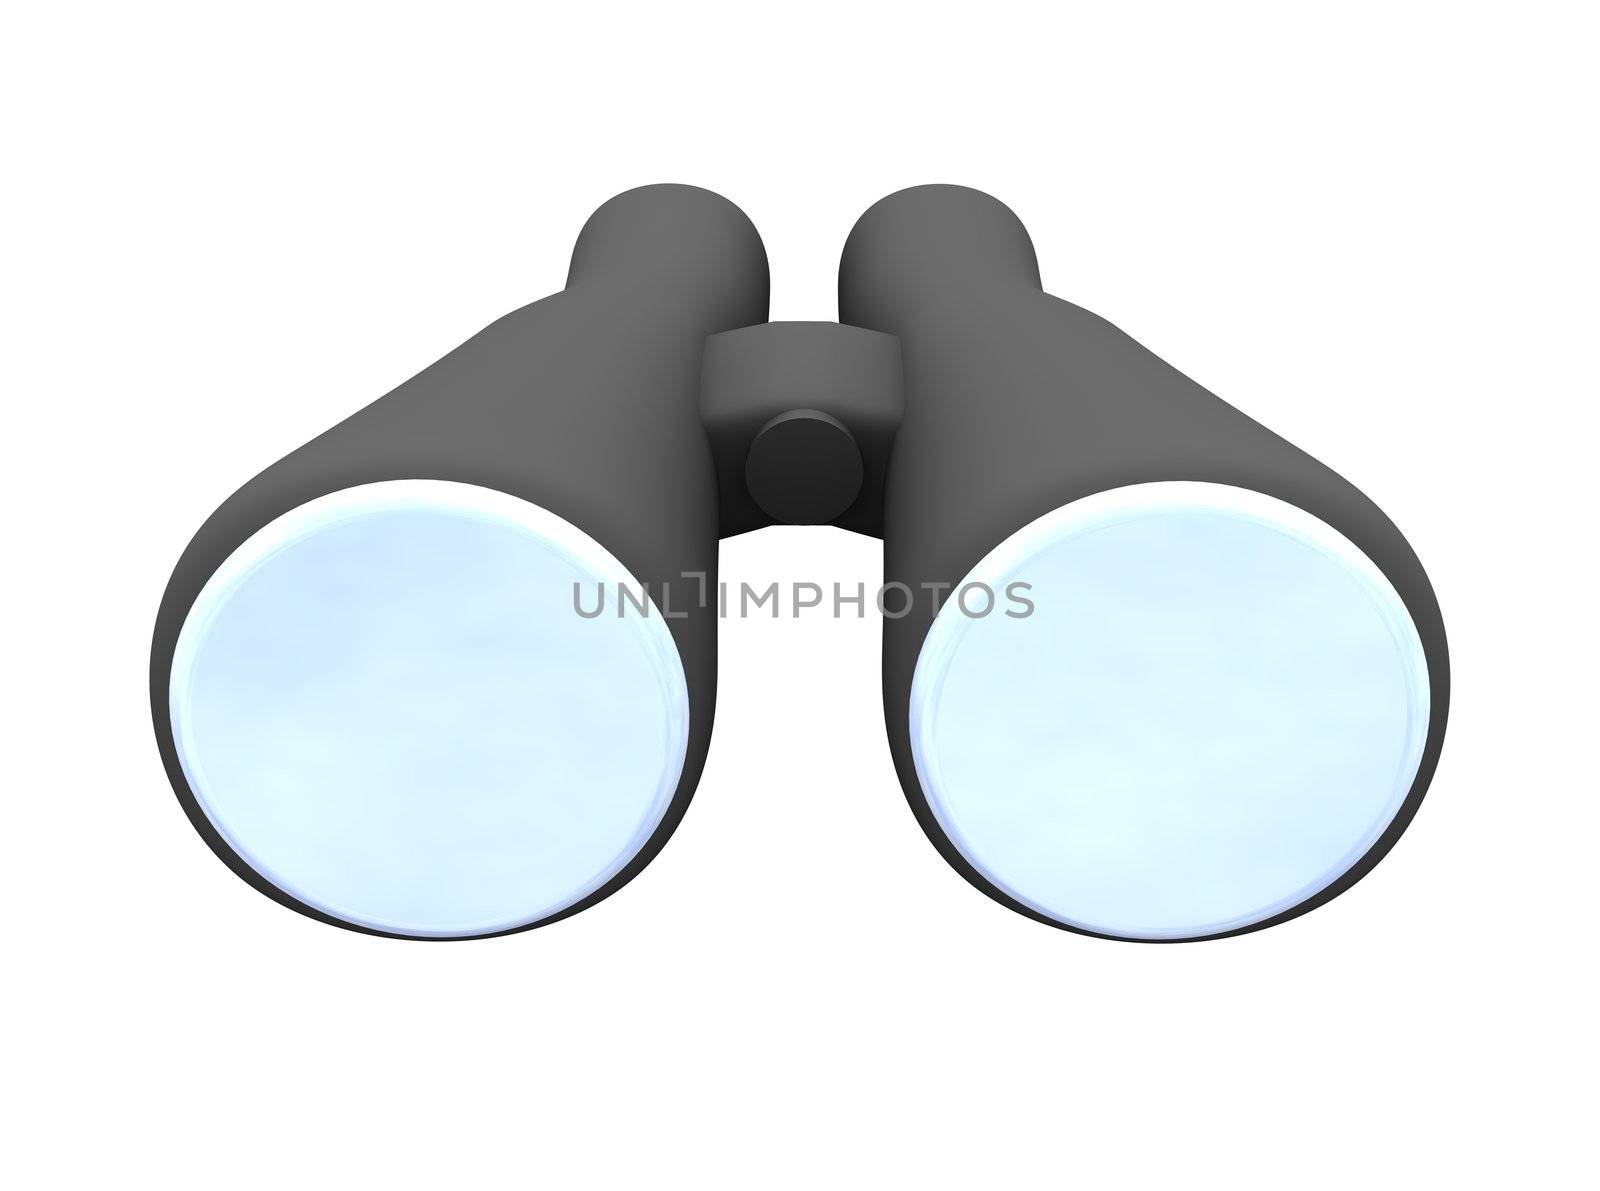 Binoculars isolated on white. 3d rendered illustration.